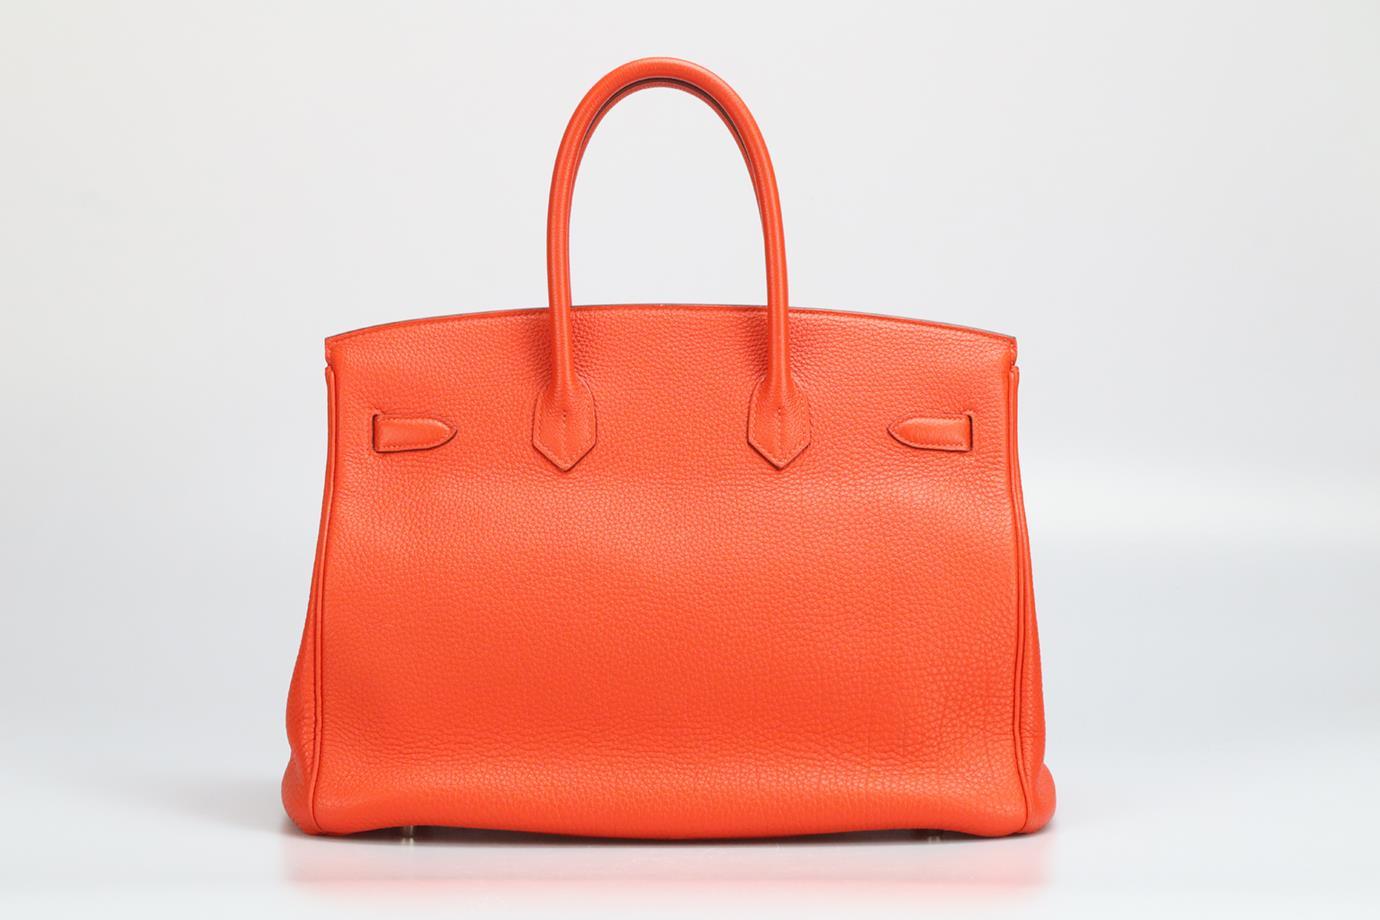 Hermès 2013 Birkin 35cm Togo Leather Bag For Sale 1